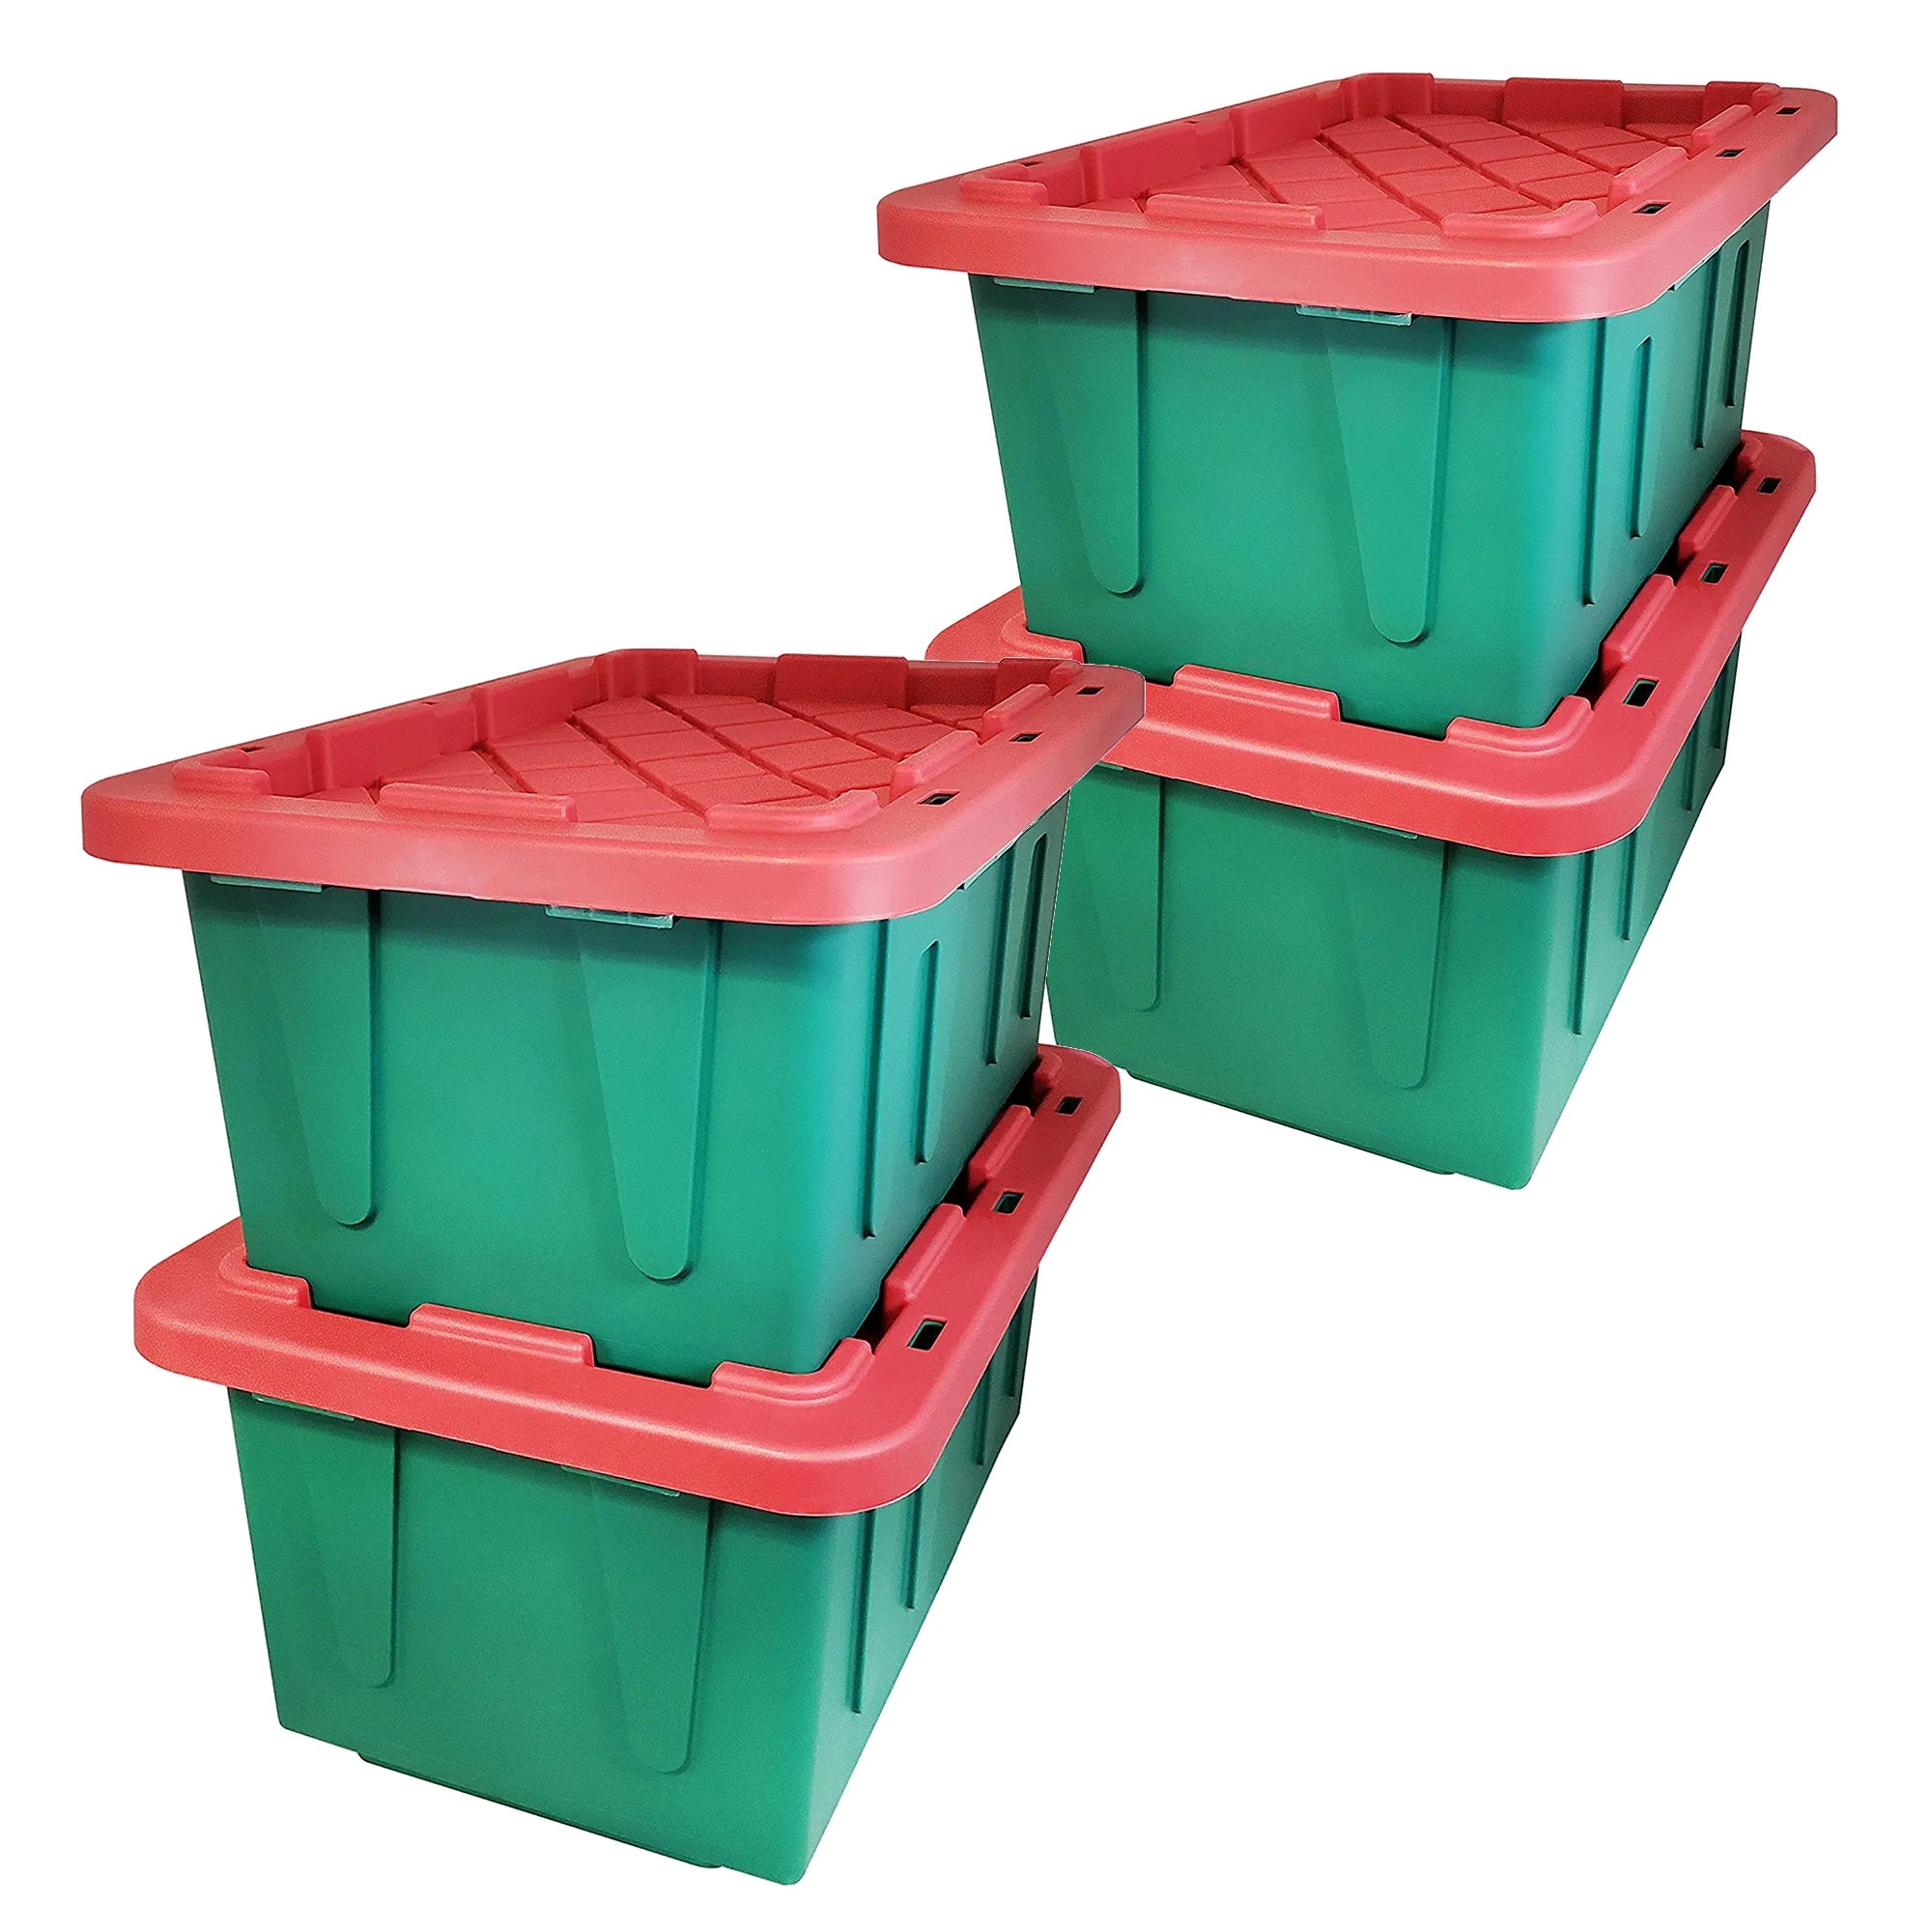 HOMZ 18 Gallon Heavy Duty Plastic Storage Container, Green/Red (4